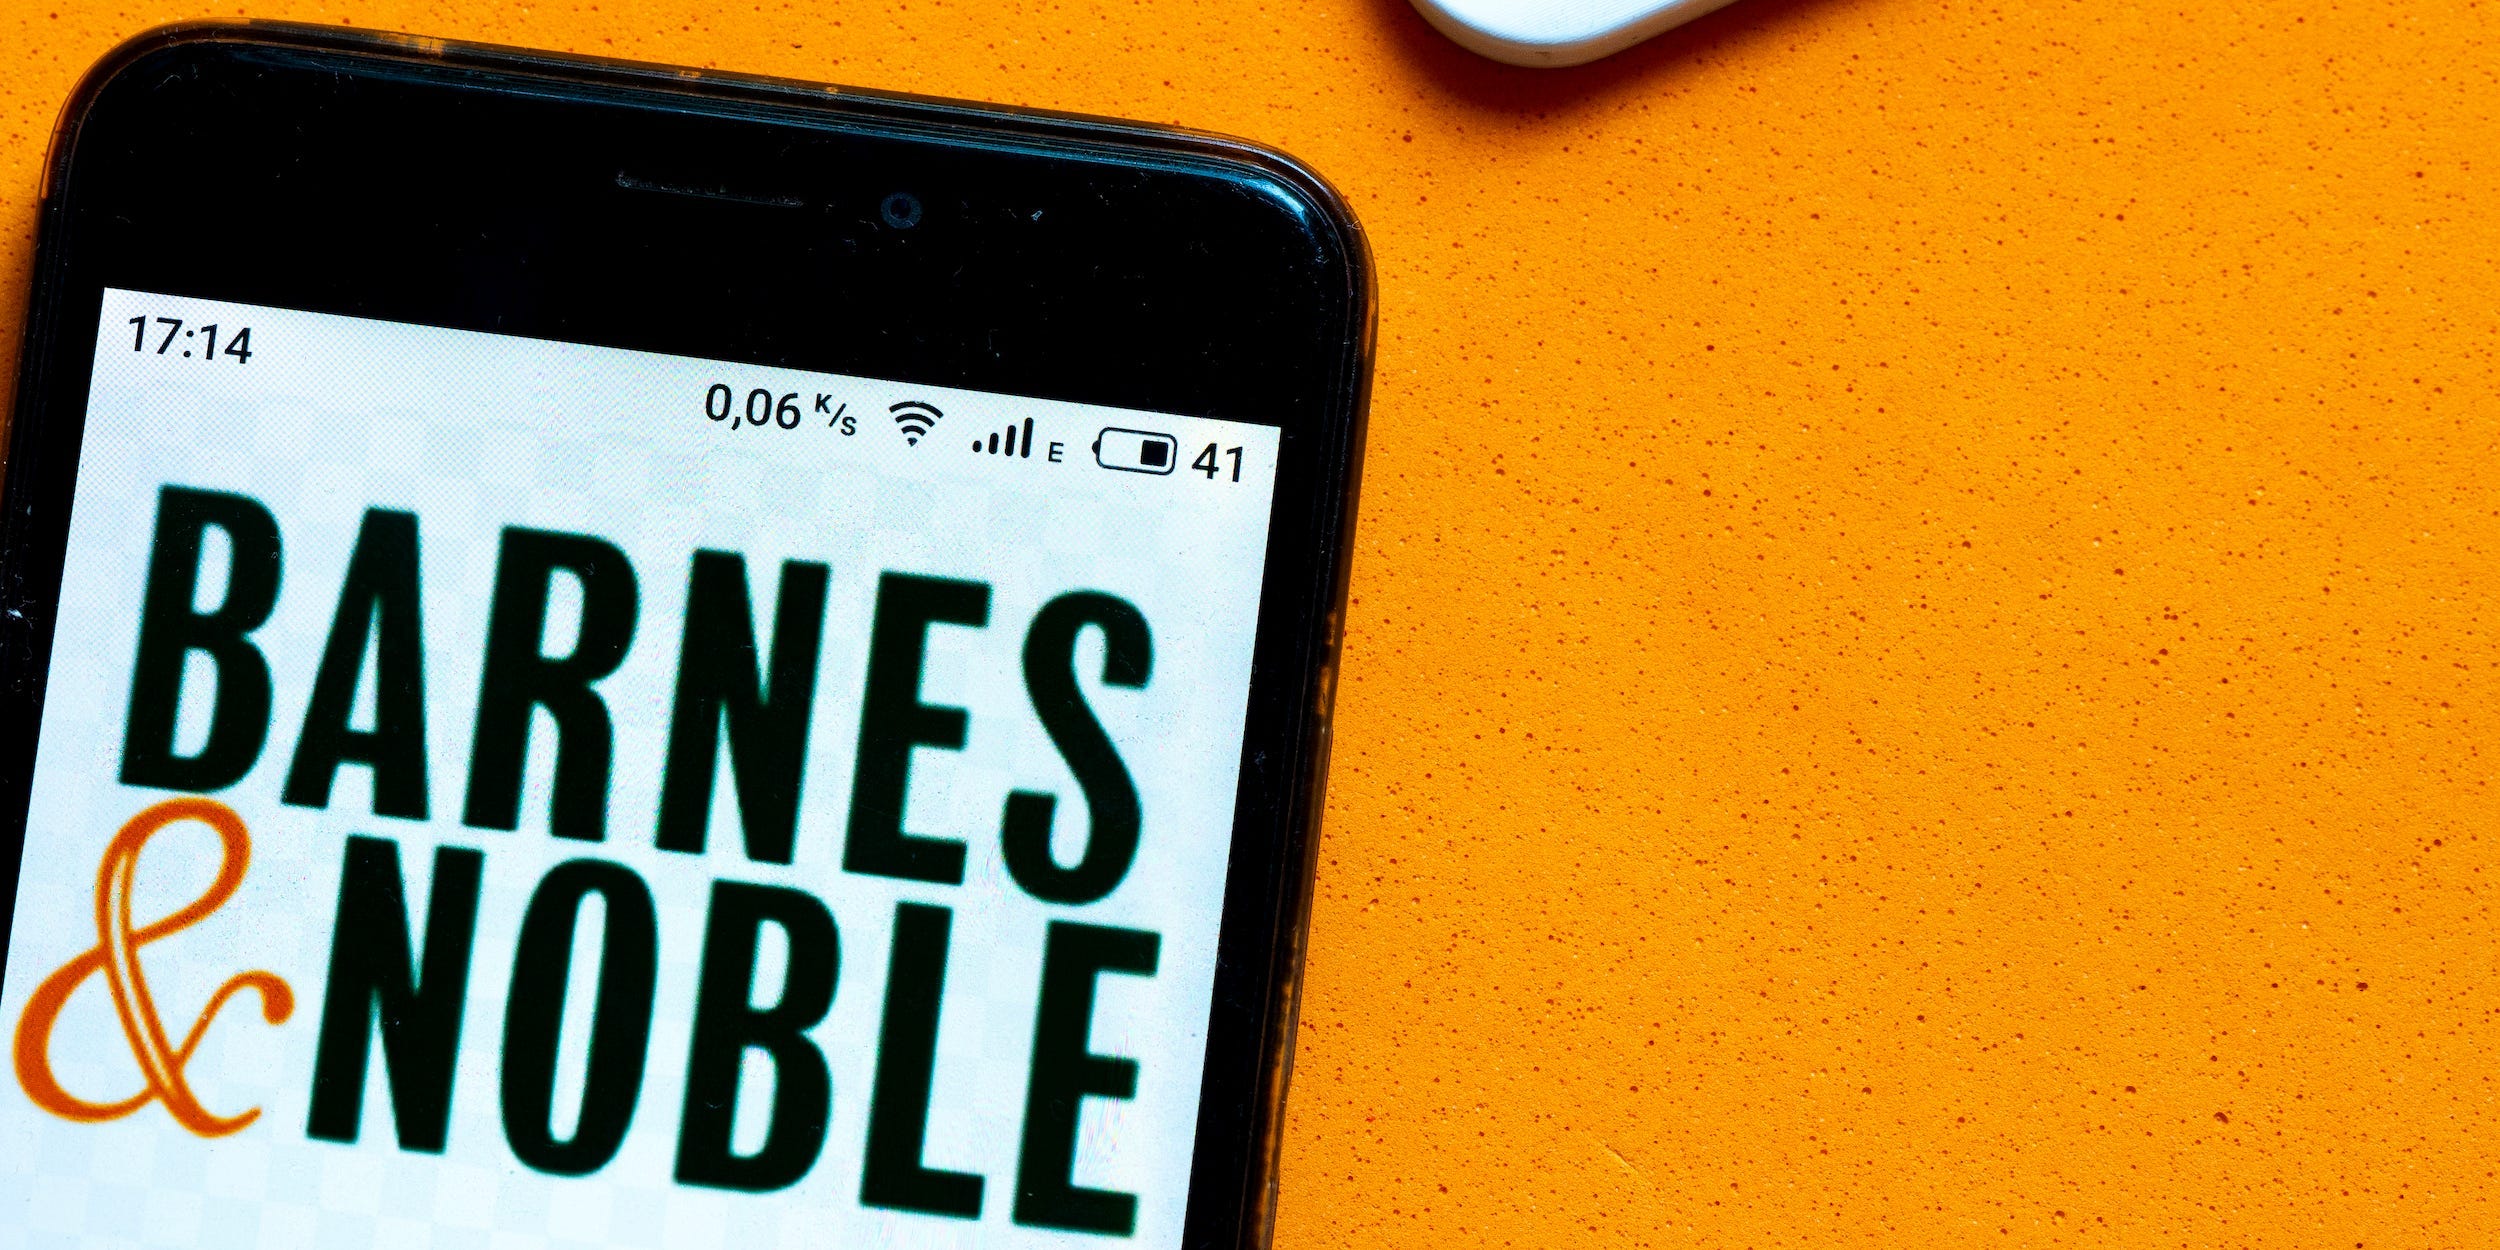 Barnes & Noble logo on a smartphone next to laptop keyboard on orange background